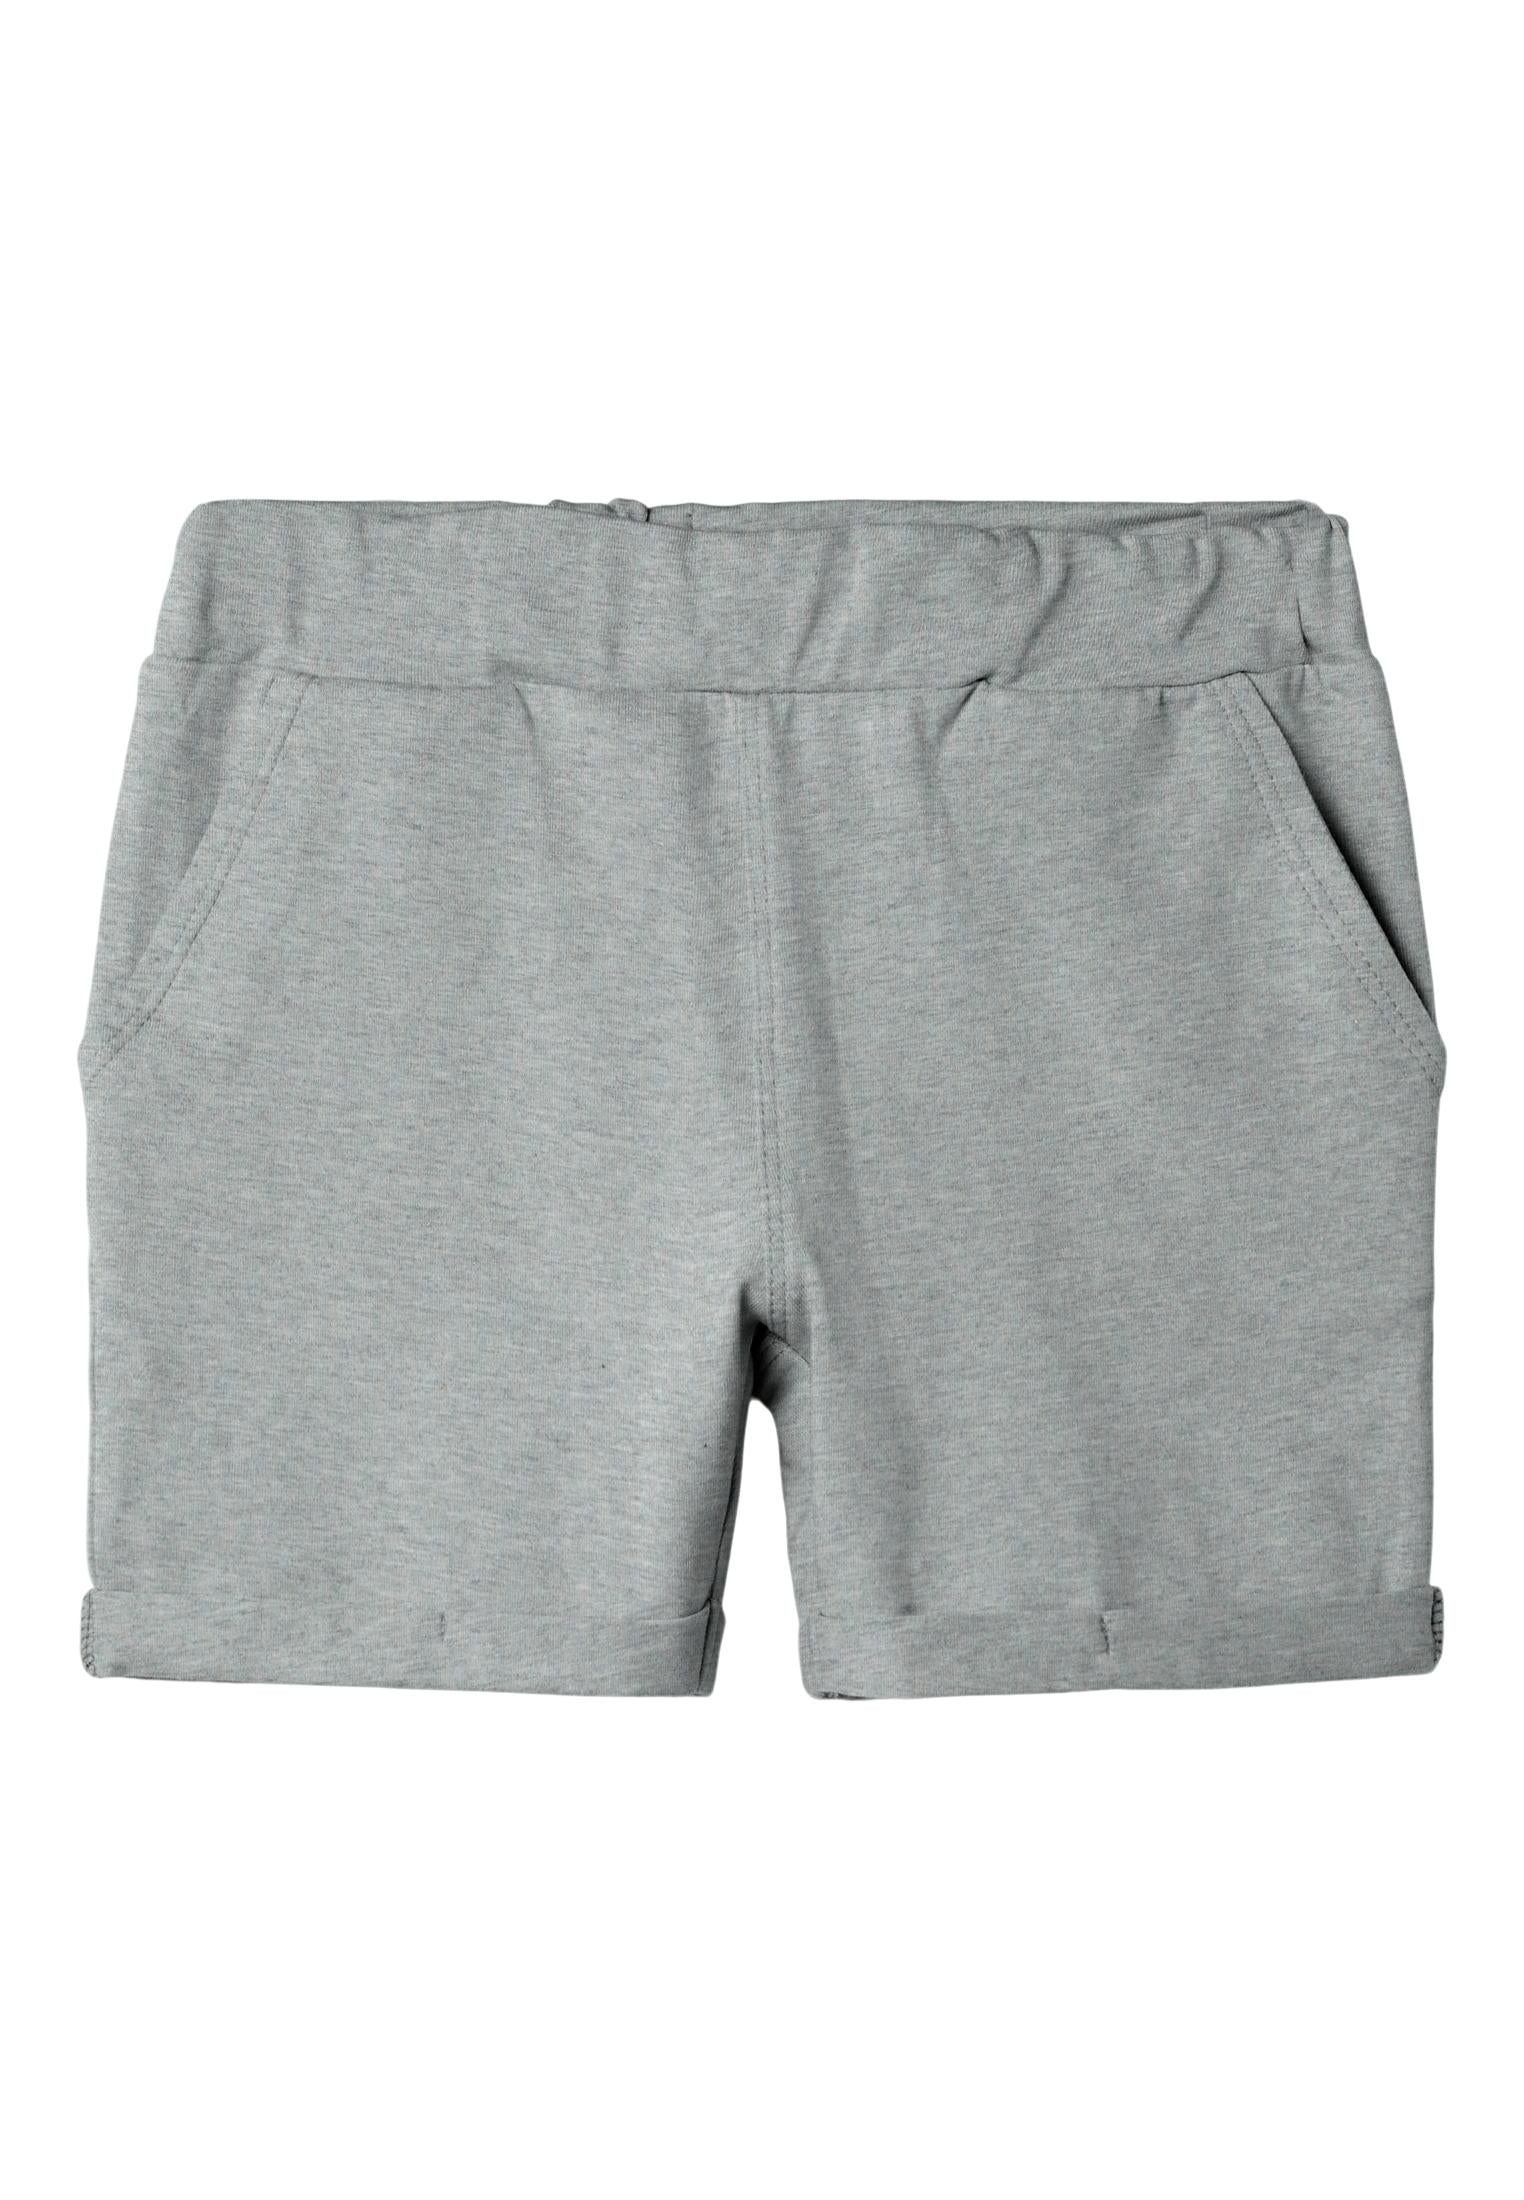 Viking Long Shorts - Grey Melange Front View